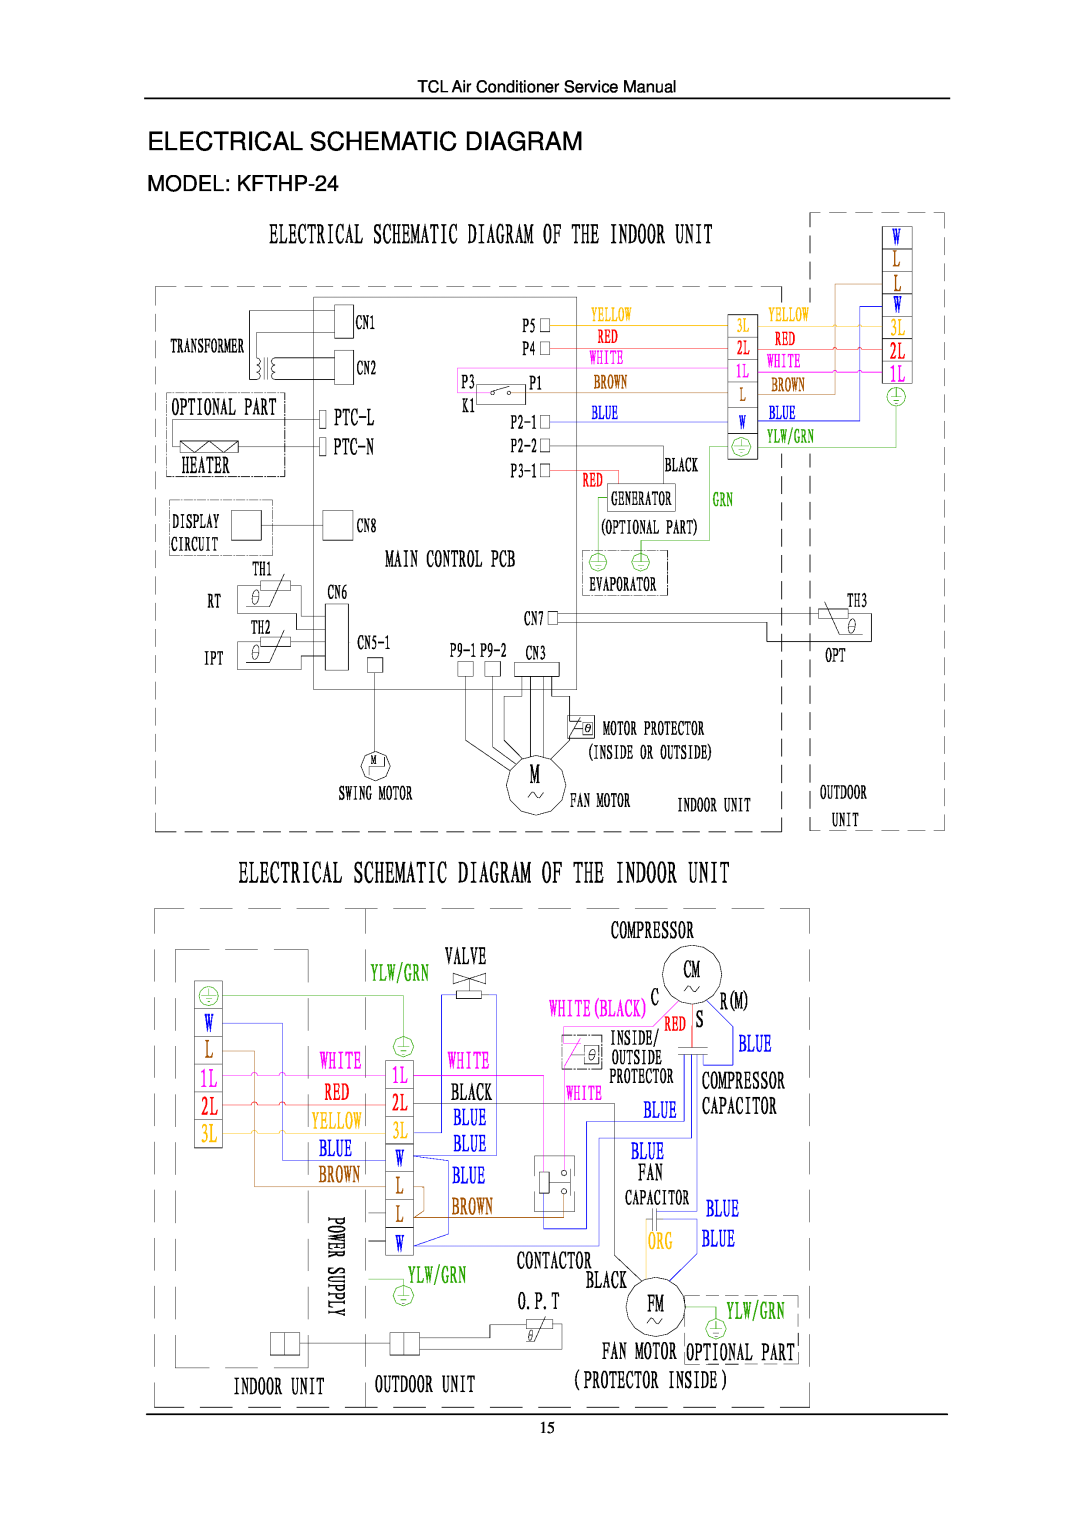 Soleus Air KFTHP-09, KFTHP-12, KFTHP-18 service manual Electrical Schematic Diagram, MODEL KFTHP-24 